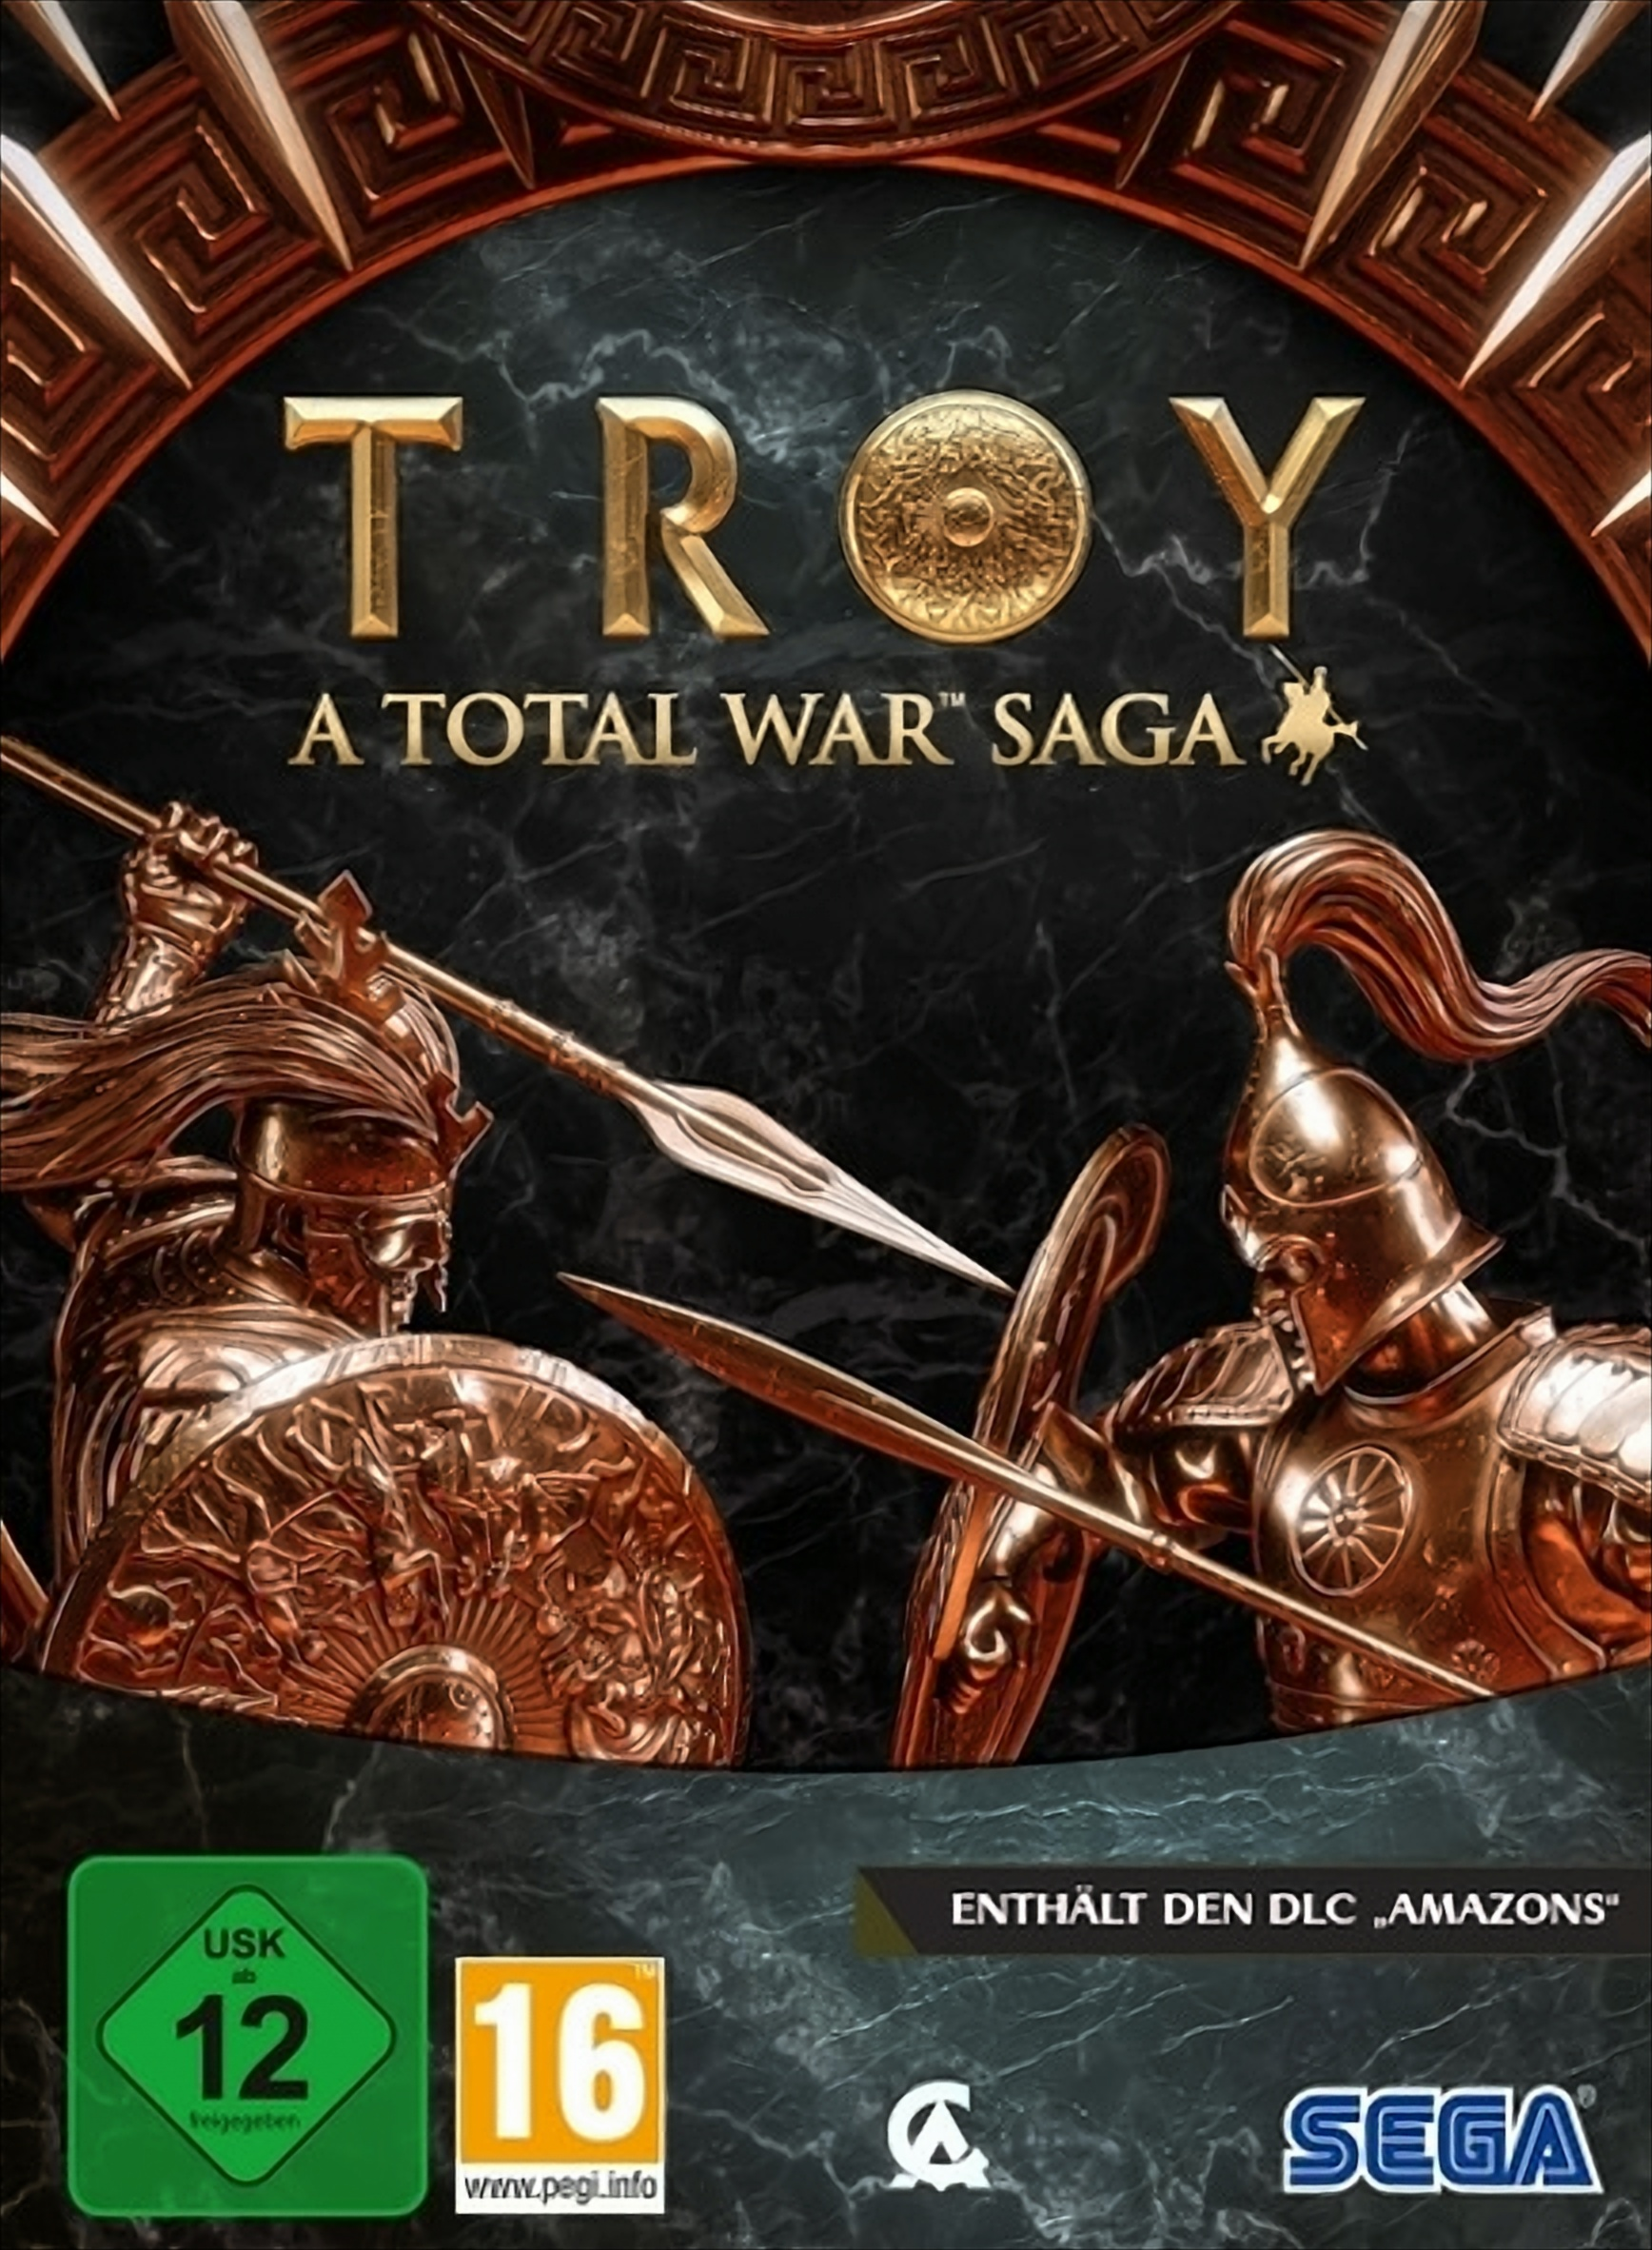 A Total War Saga: [PC] - Troy Edition Limited